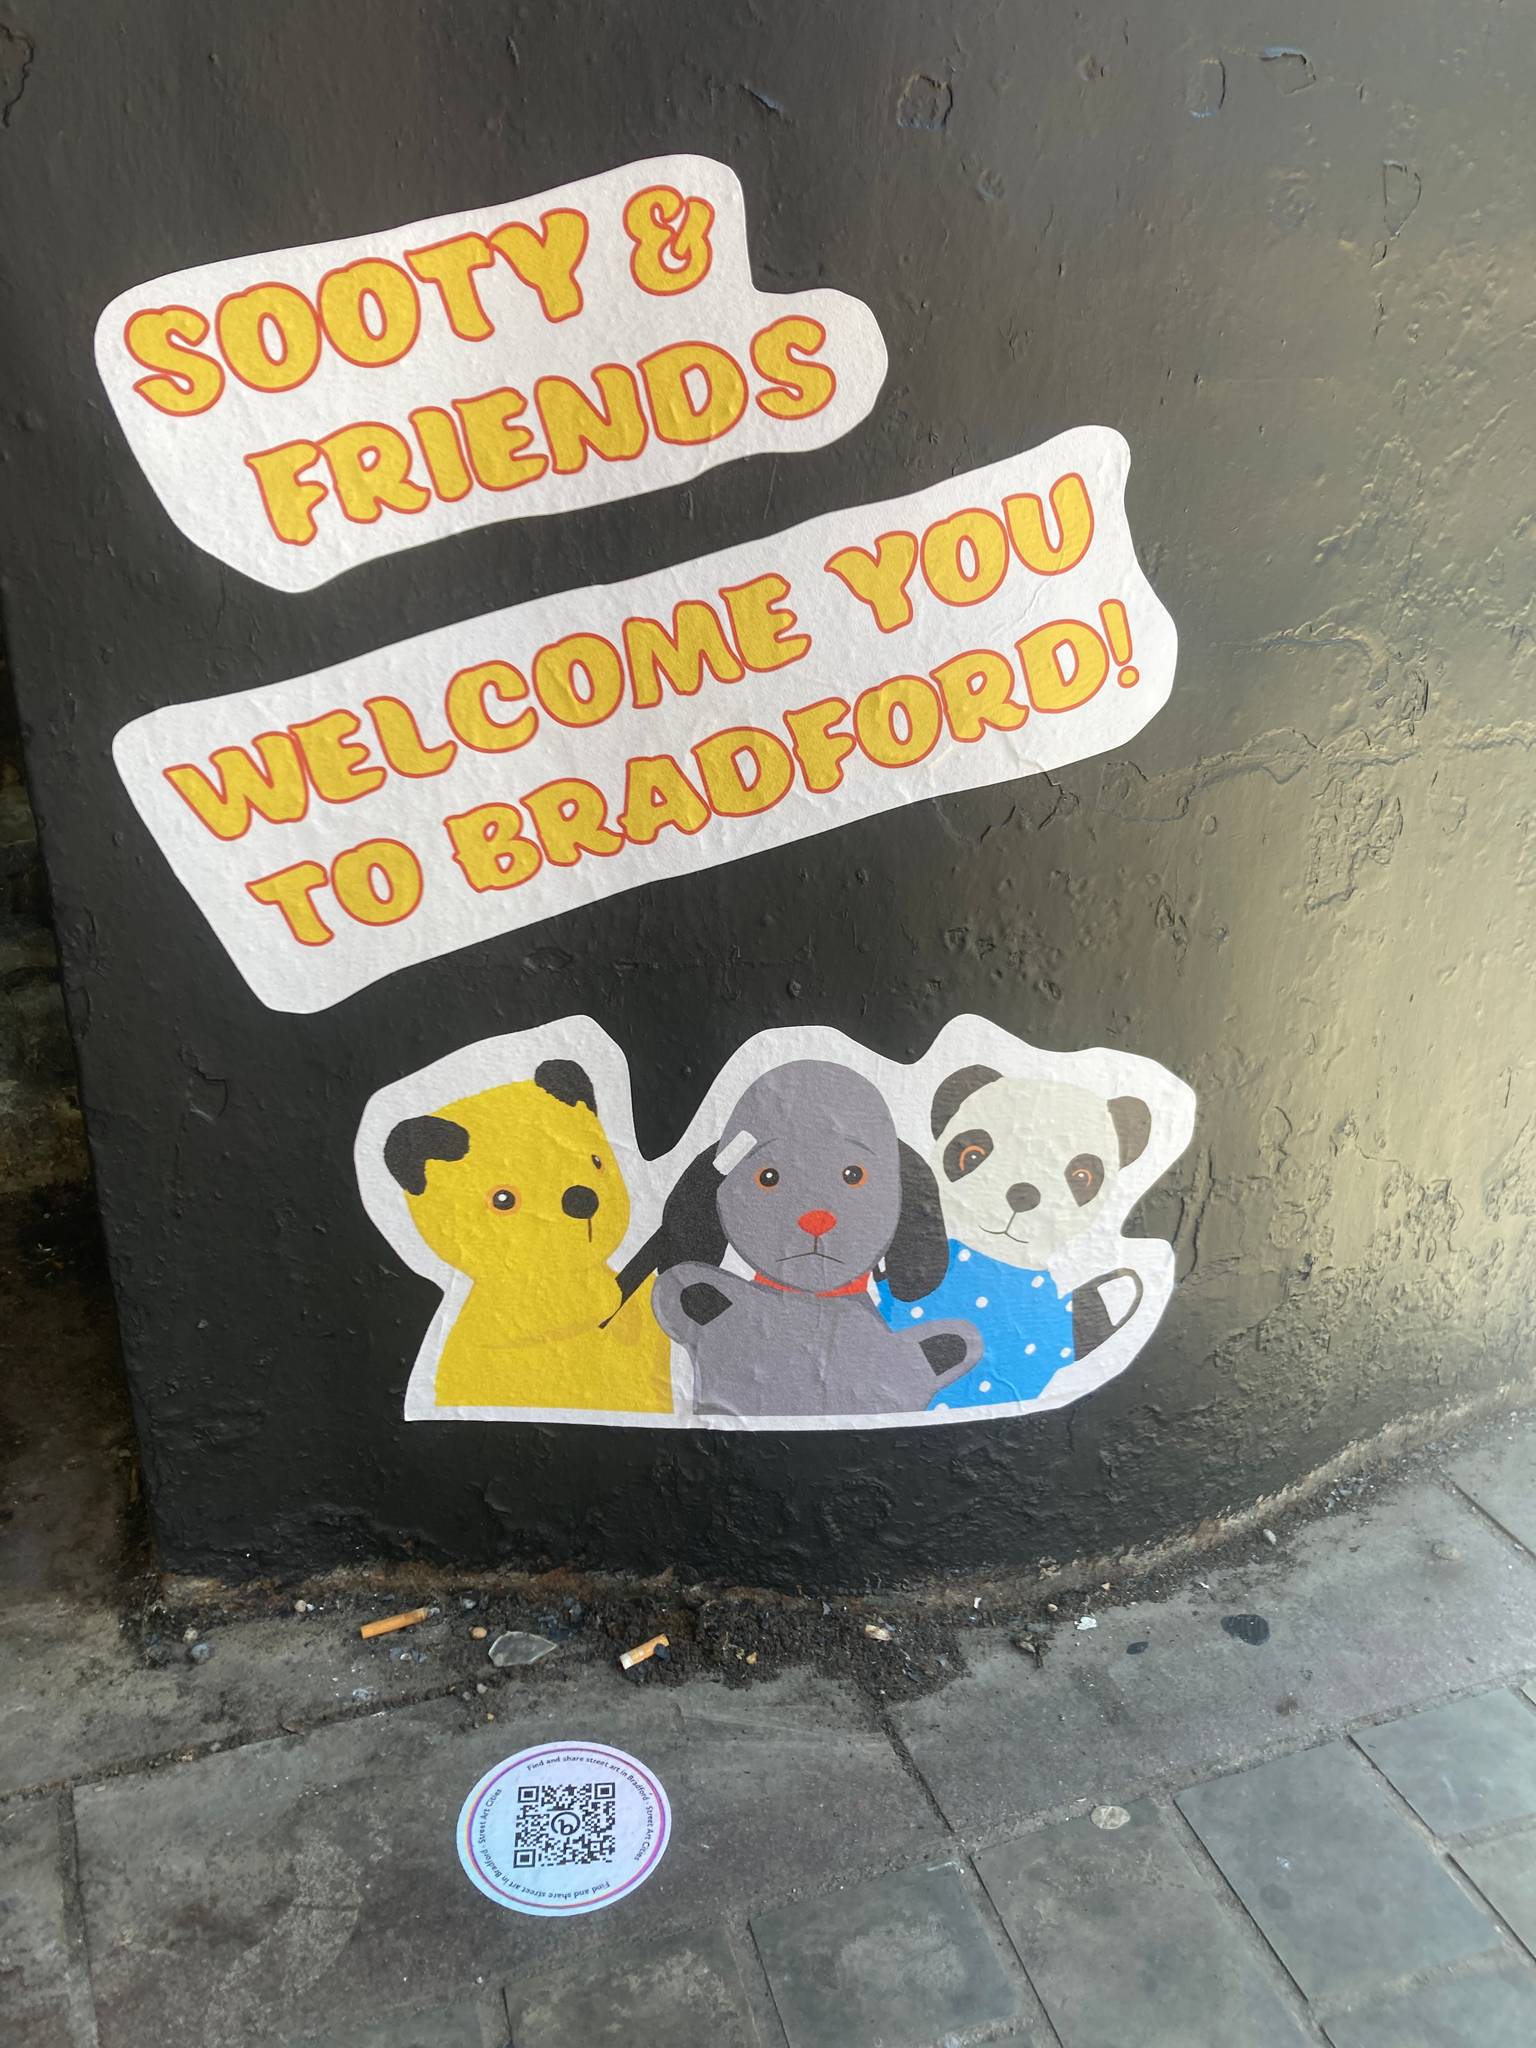 YAYA&mdash;Sooty & Friends Welcome to Bradford